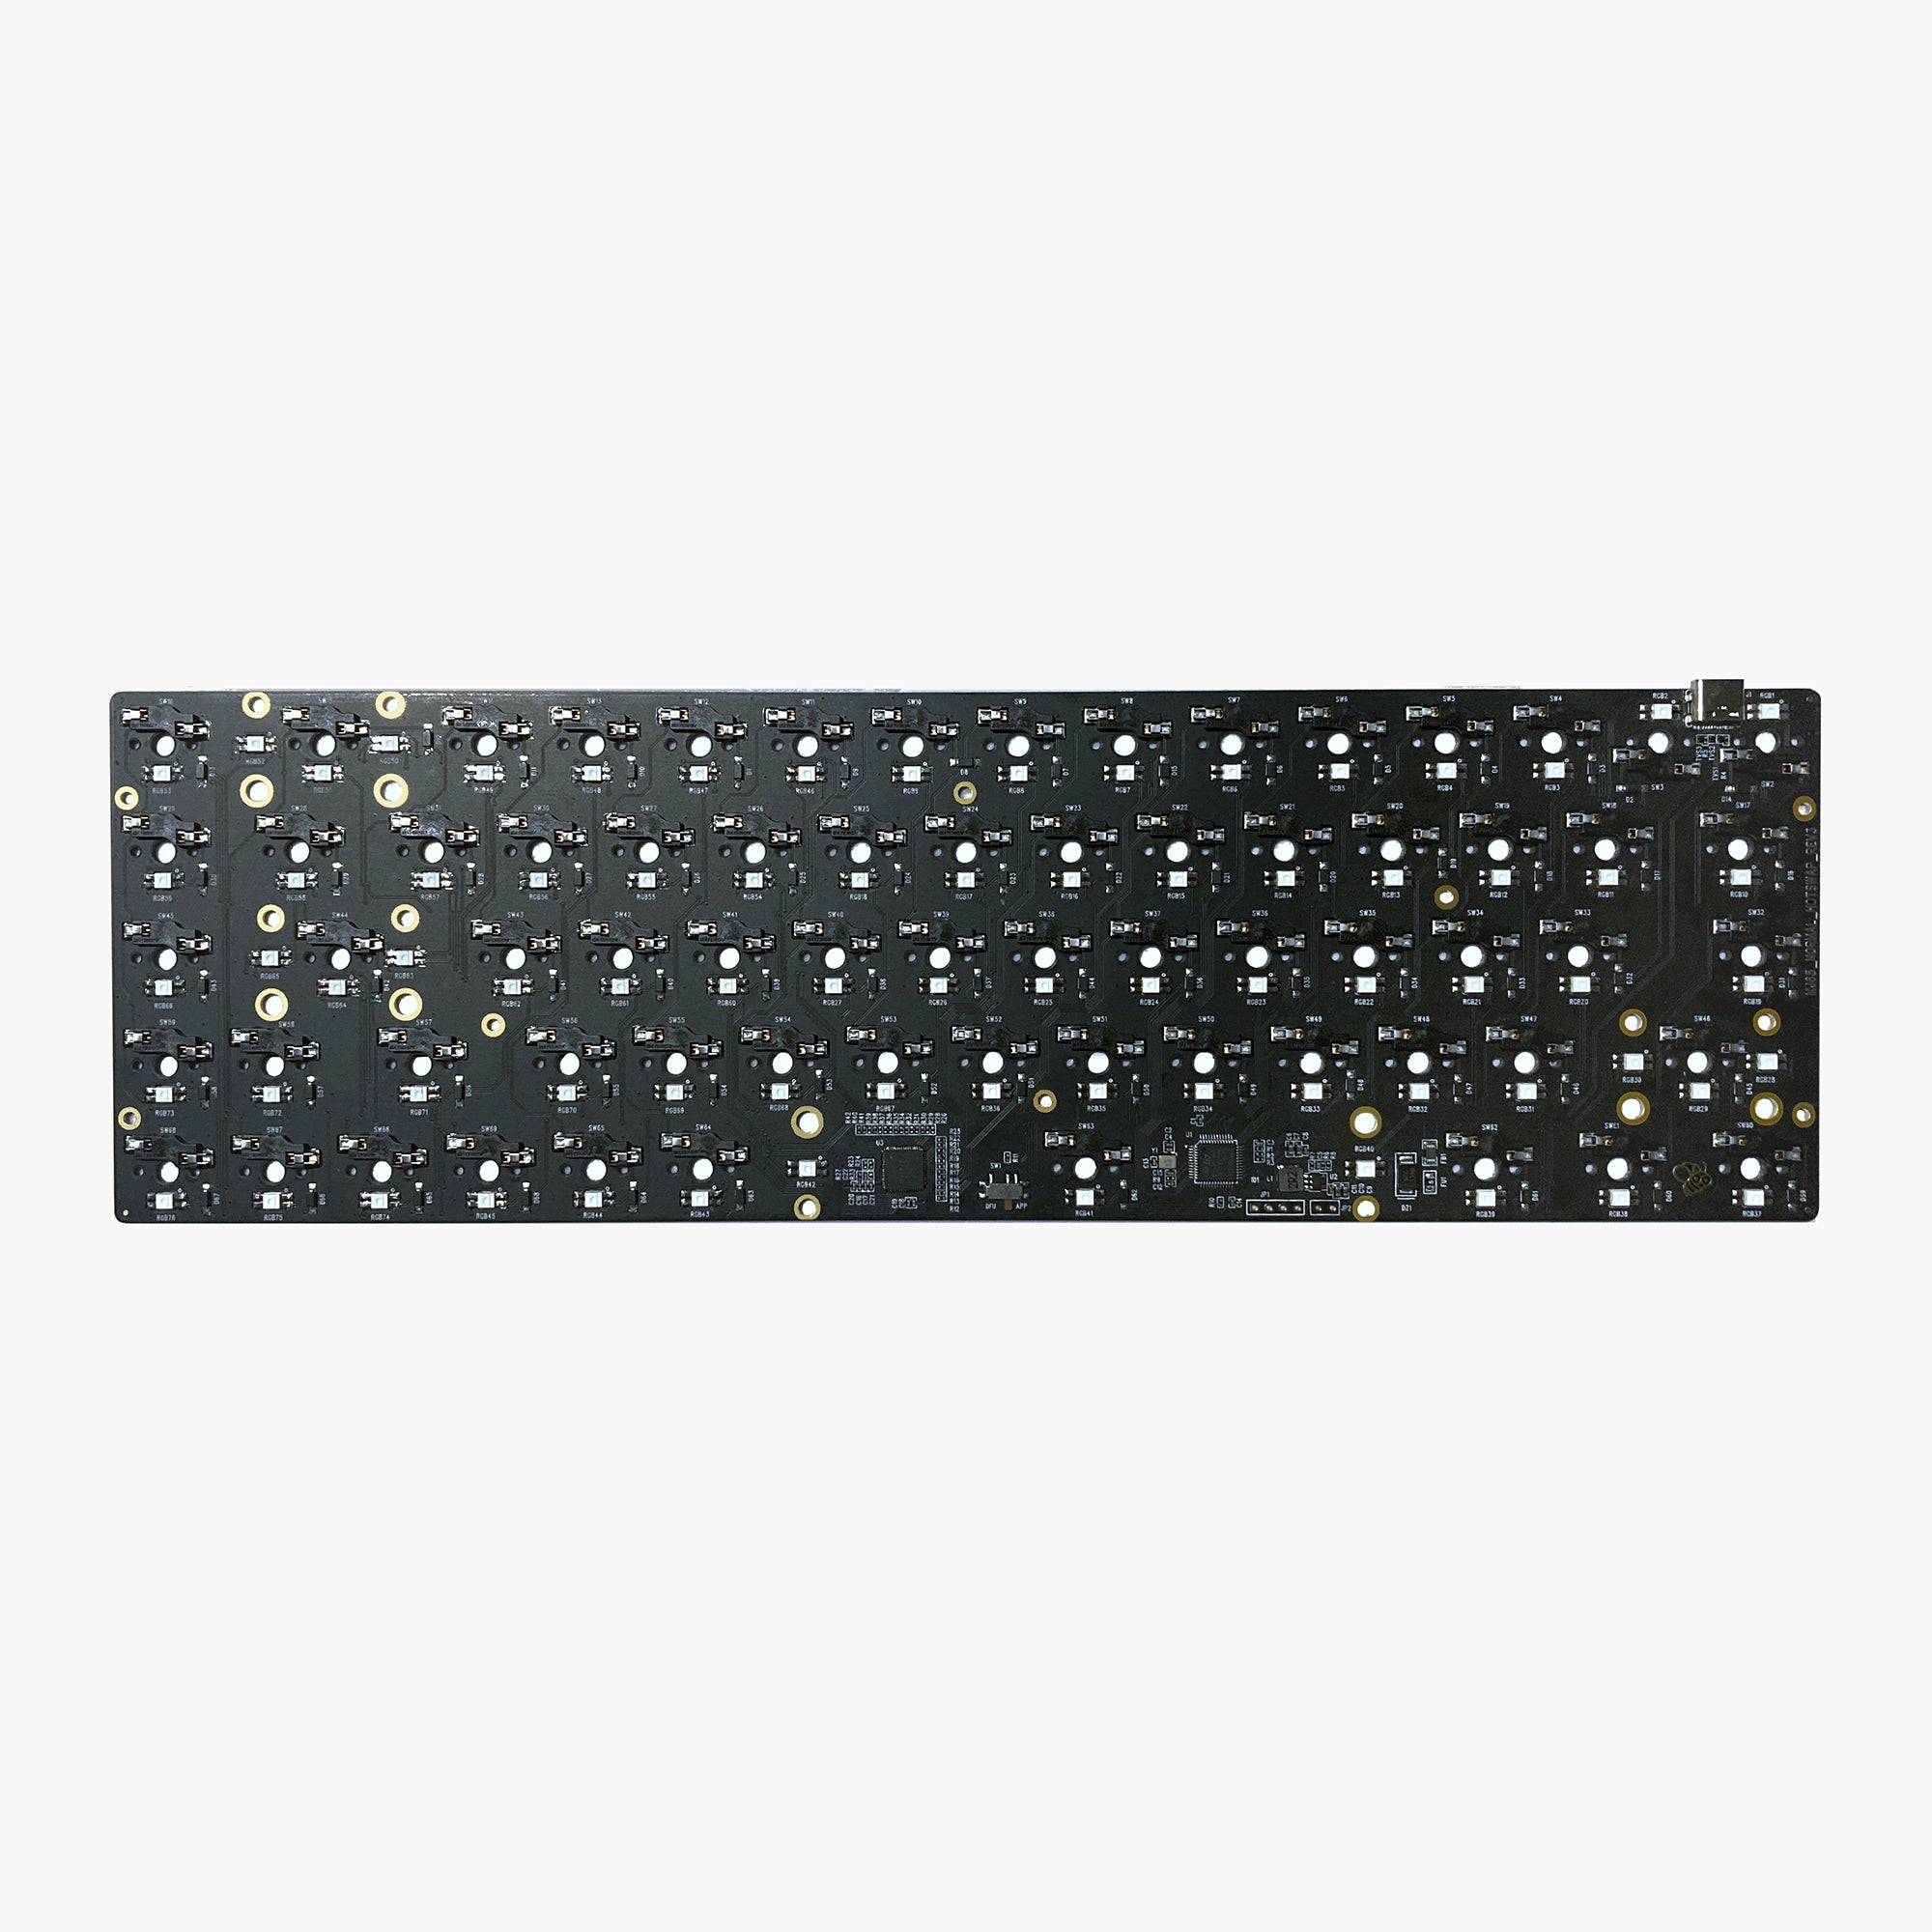 MelGeek MJ65 65% Keyboard PCBA Hotswappable